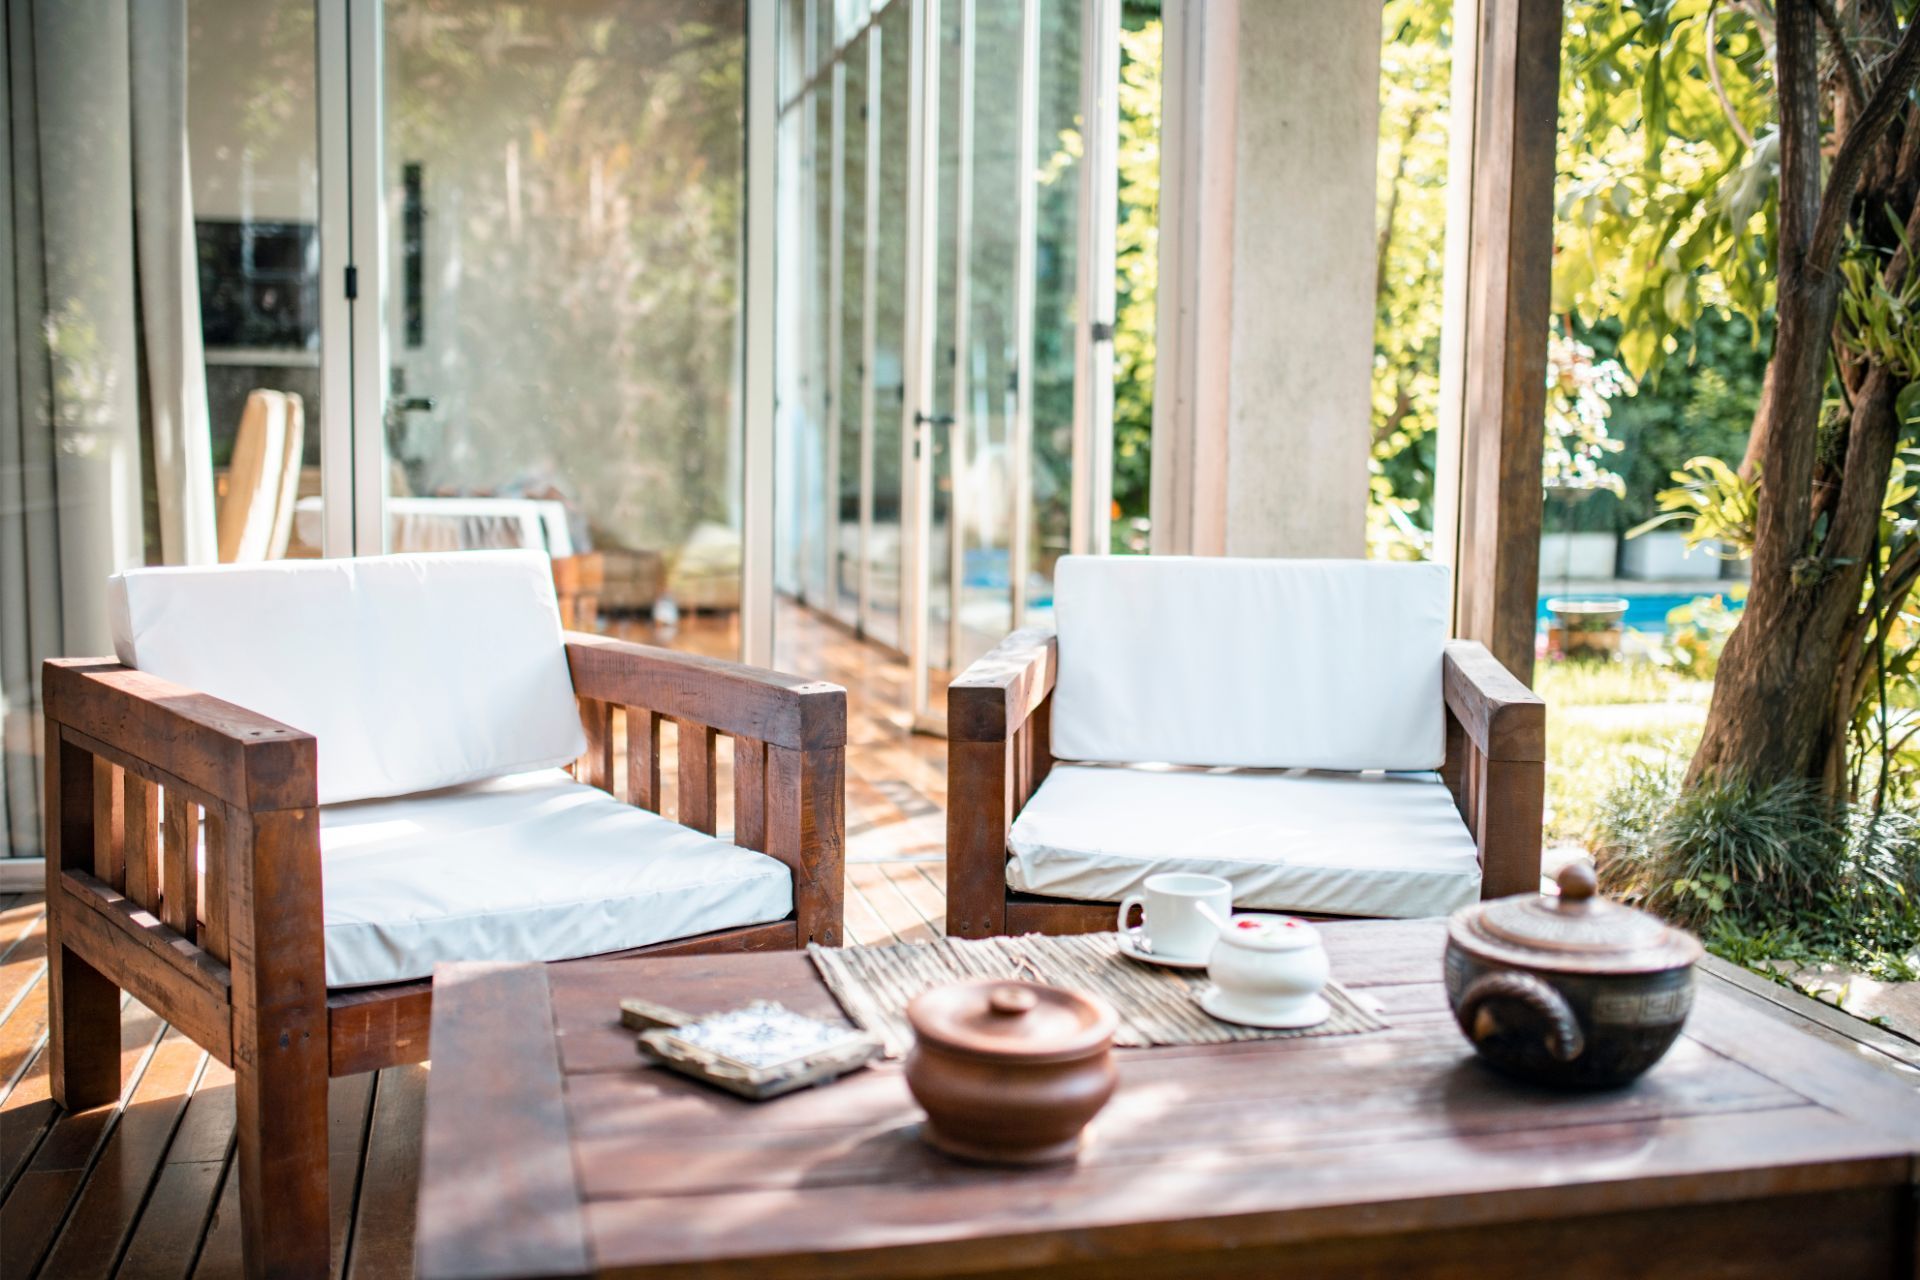 Zen deck area with wooden furniture and tea set in Saint Paul, MN.